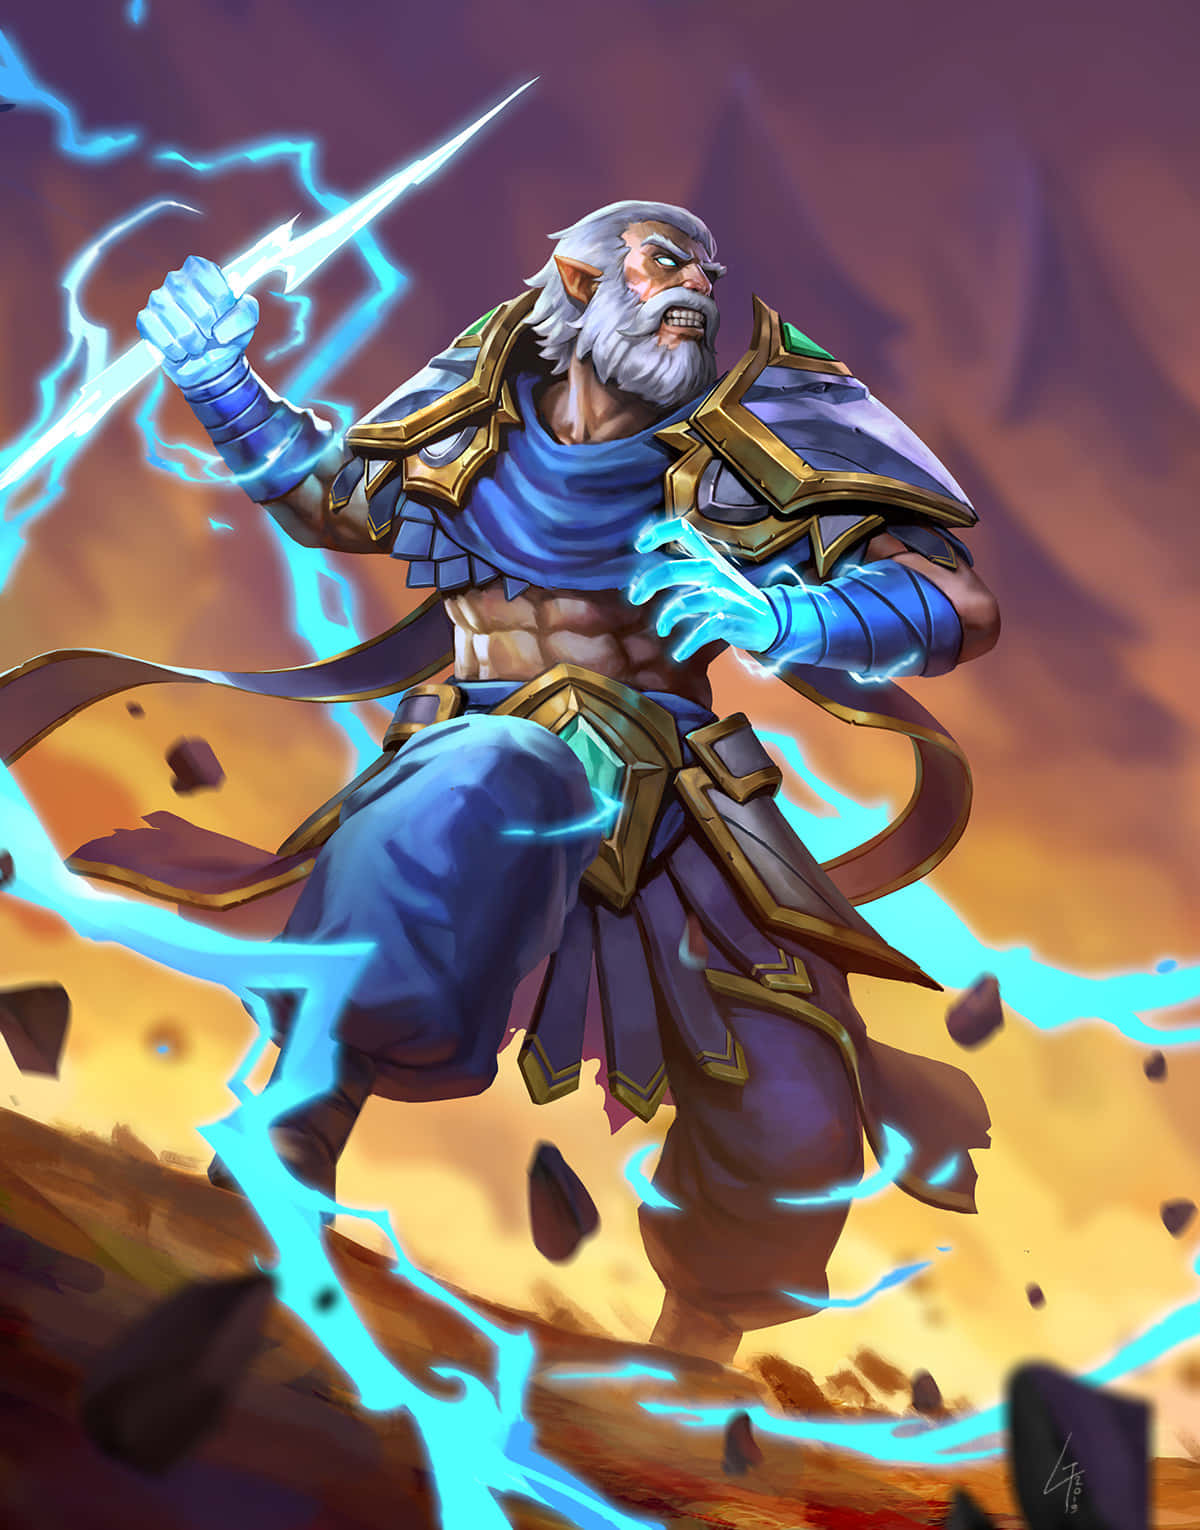 Thunderous Power - Zeus unleashes his fury in Dota 2 Wallpaper